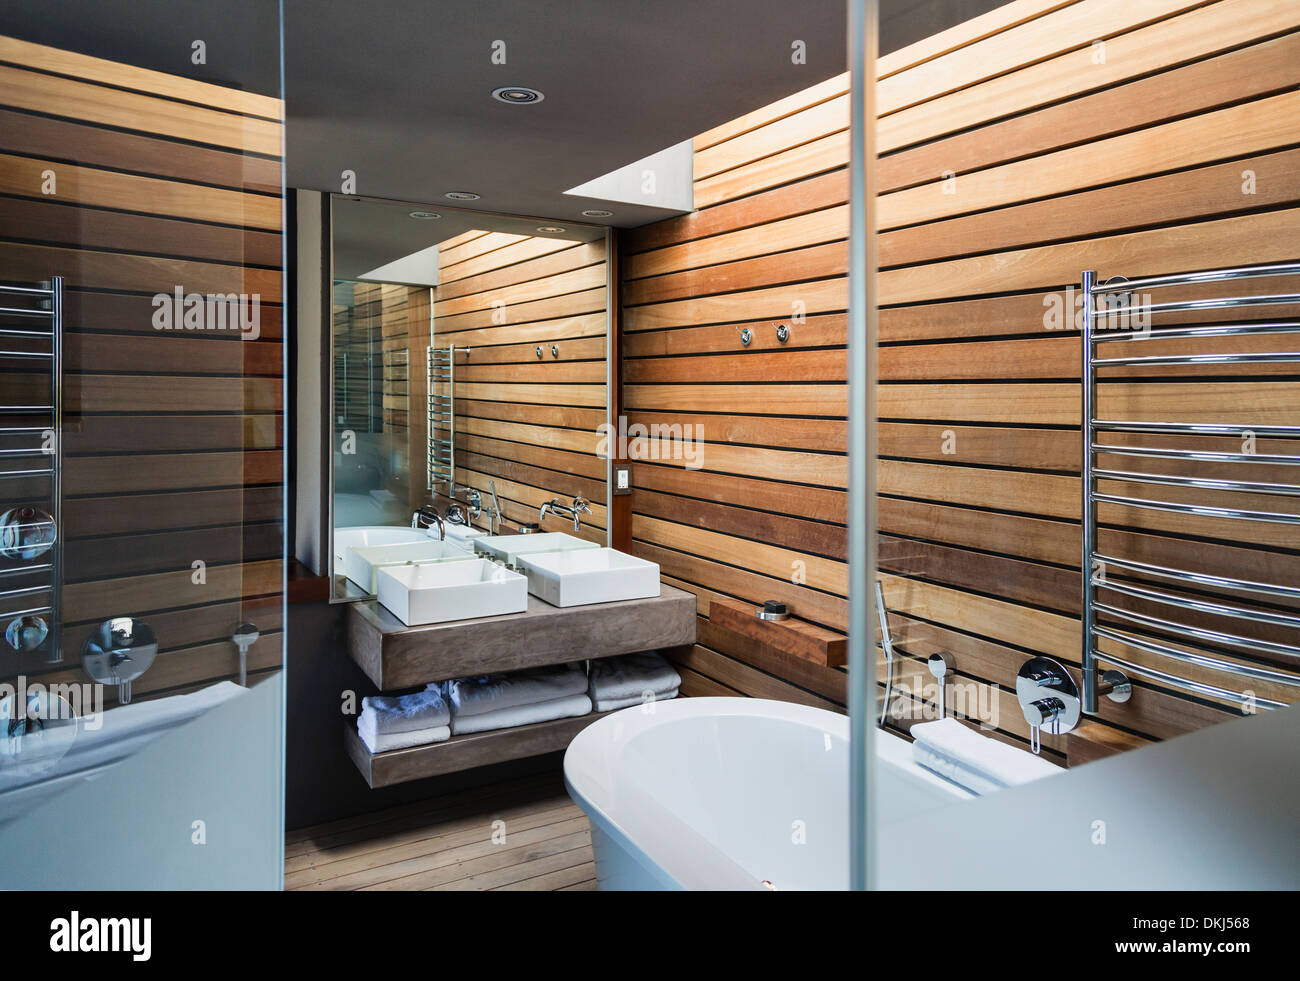 Sinks and bathtub in modern bathroom Stock Photo